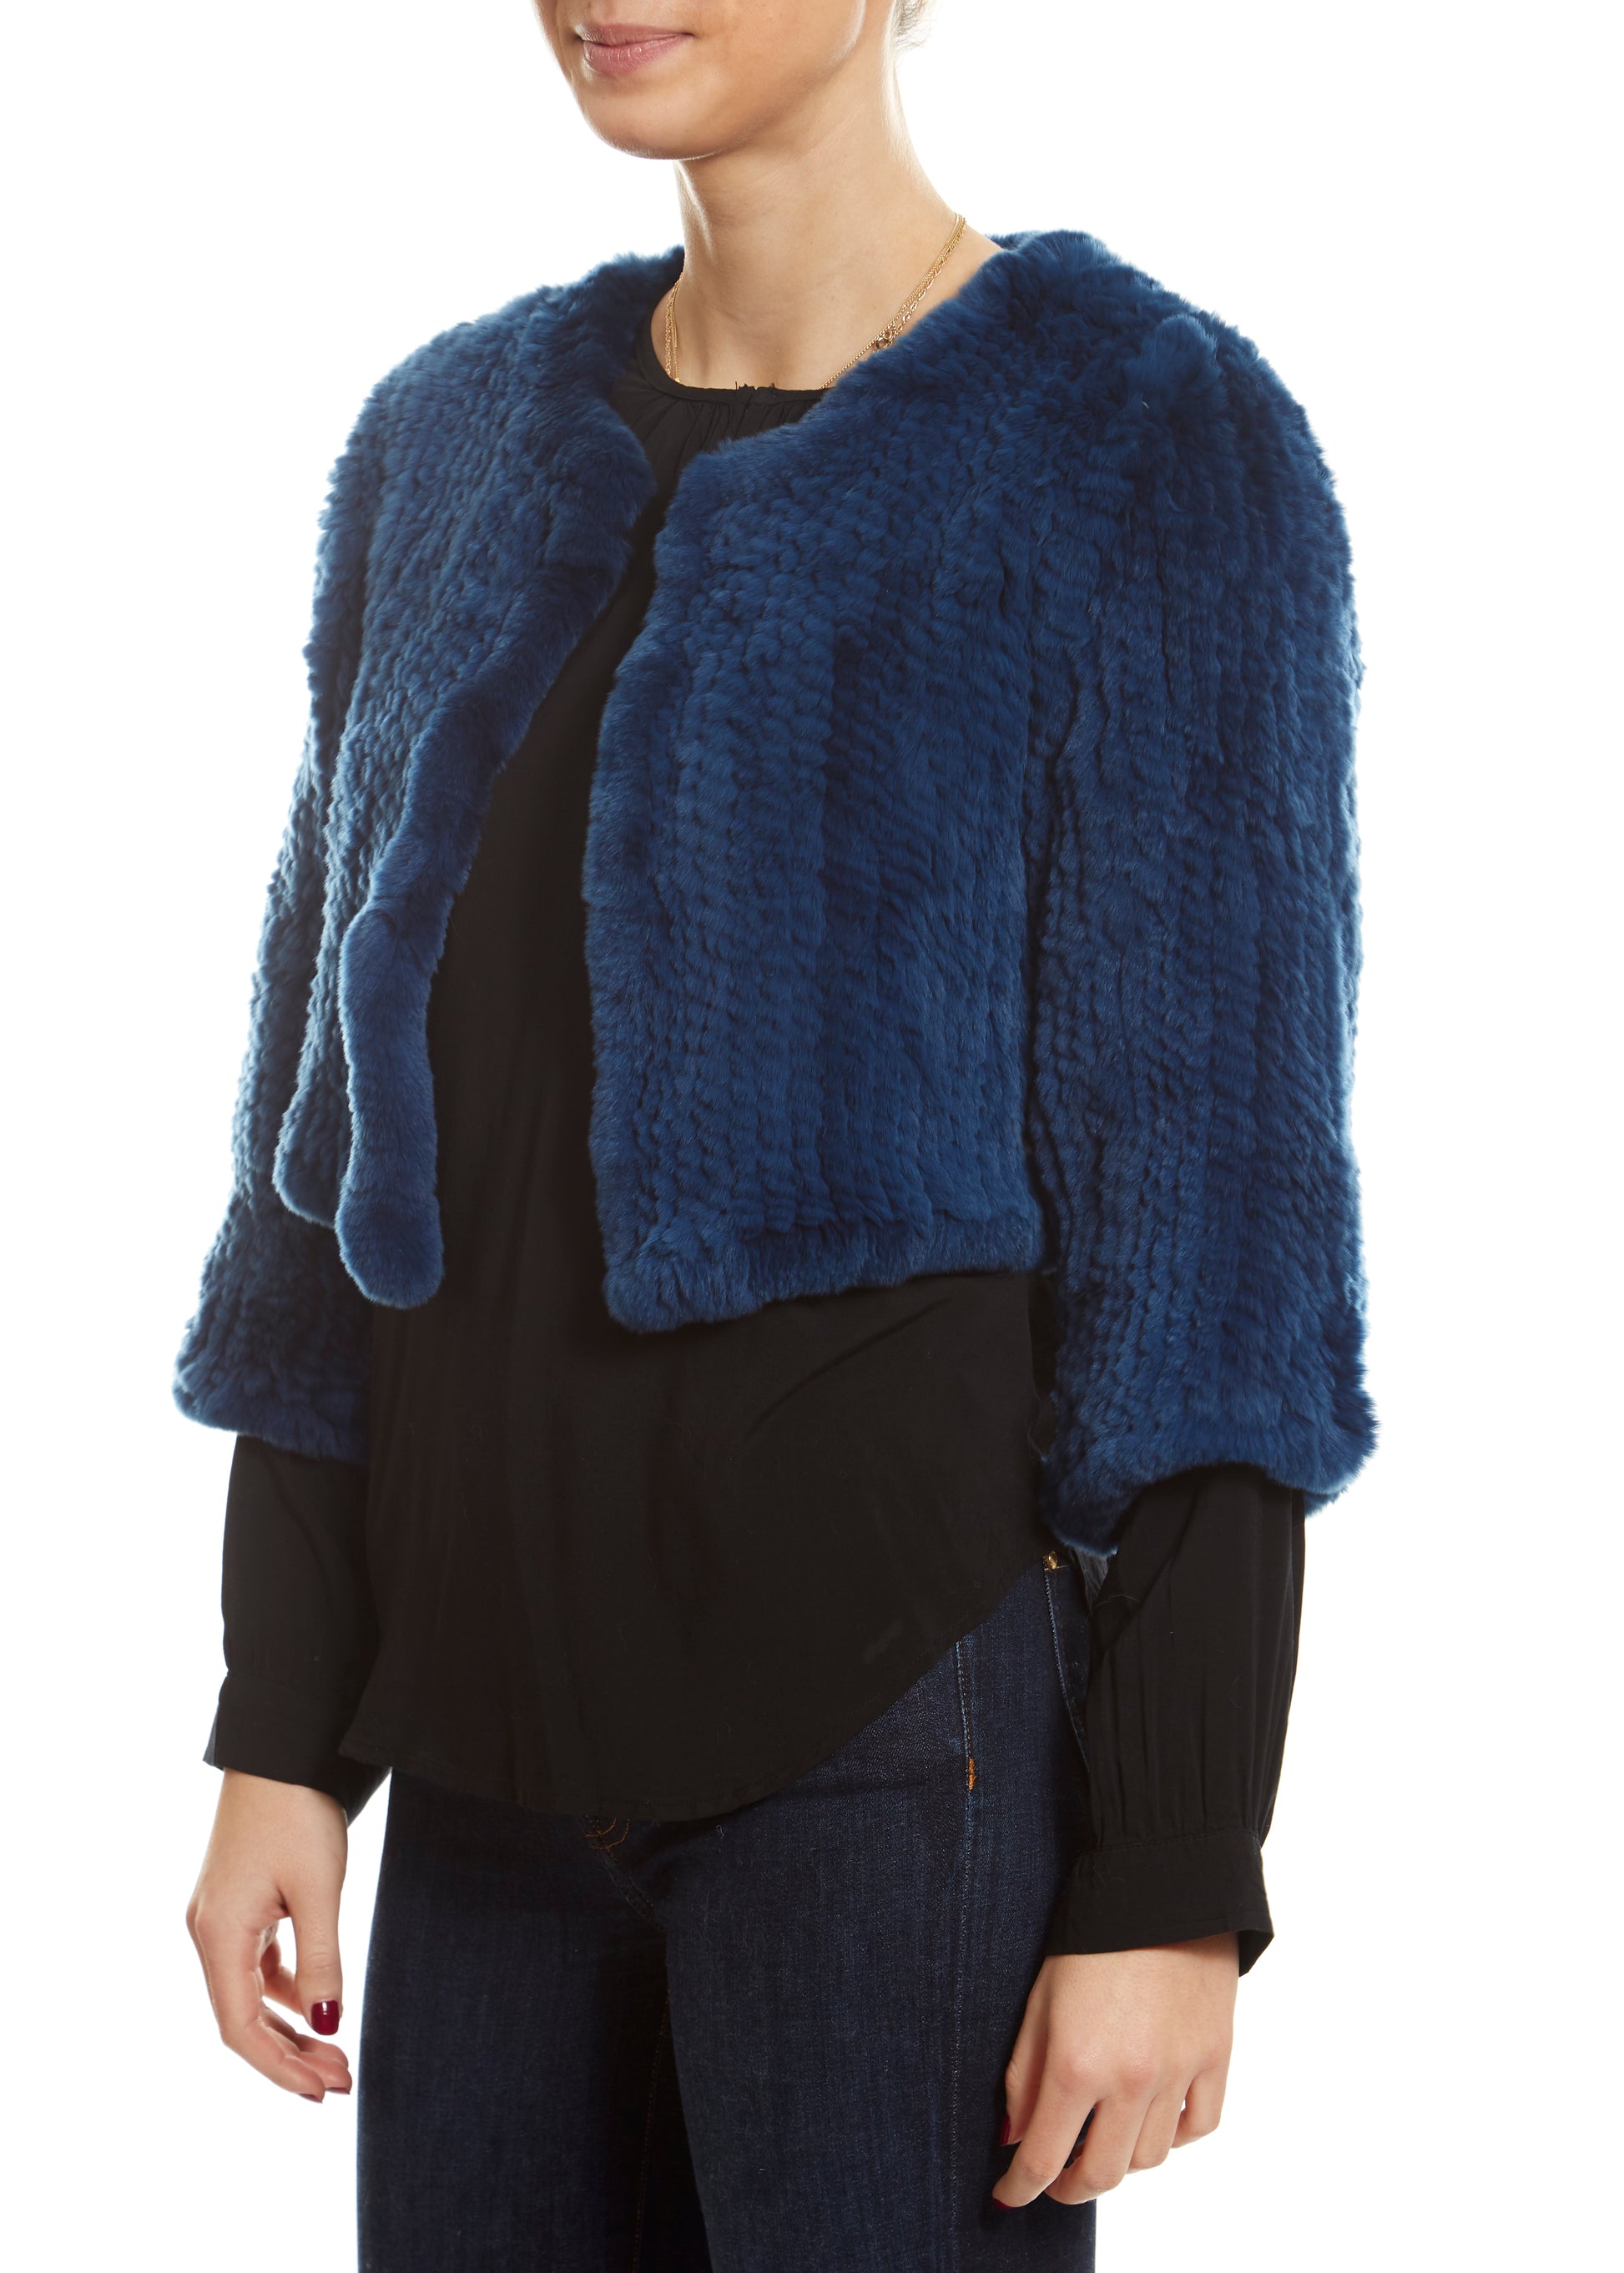 Knitted Rabbit Royal Blue Green Genuine Fur Jacket - Jessimara